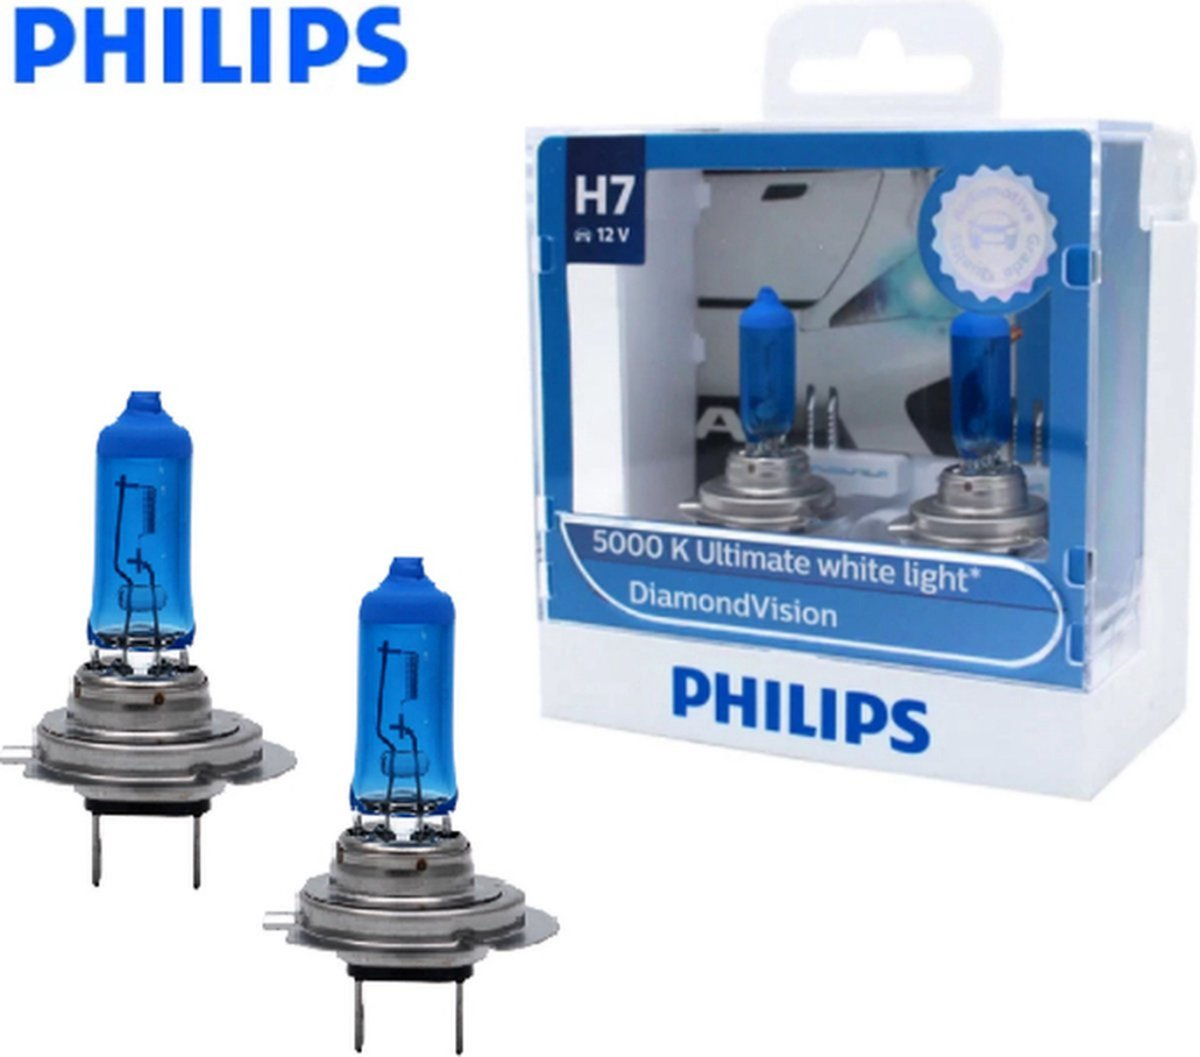 H7 55 Watt Philips Diamond Vision lampen 12V – Helder Wit licht 5000K – Xenon look – LED look – Meer lichtopbrengst – Lange levensduur – H7 55w Autolampen – Koplampen – Kleur wit – H.O.D. halogeen Origineel Philips lampen – Xenon gas –2 stuks